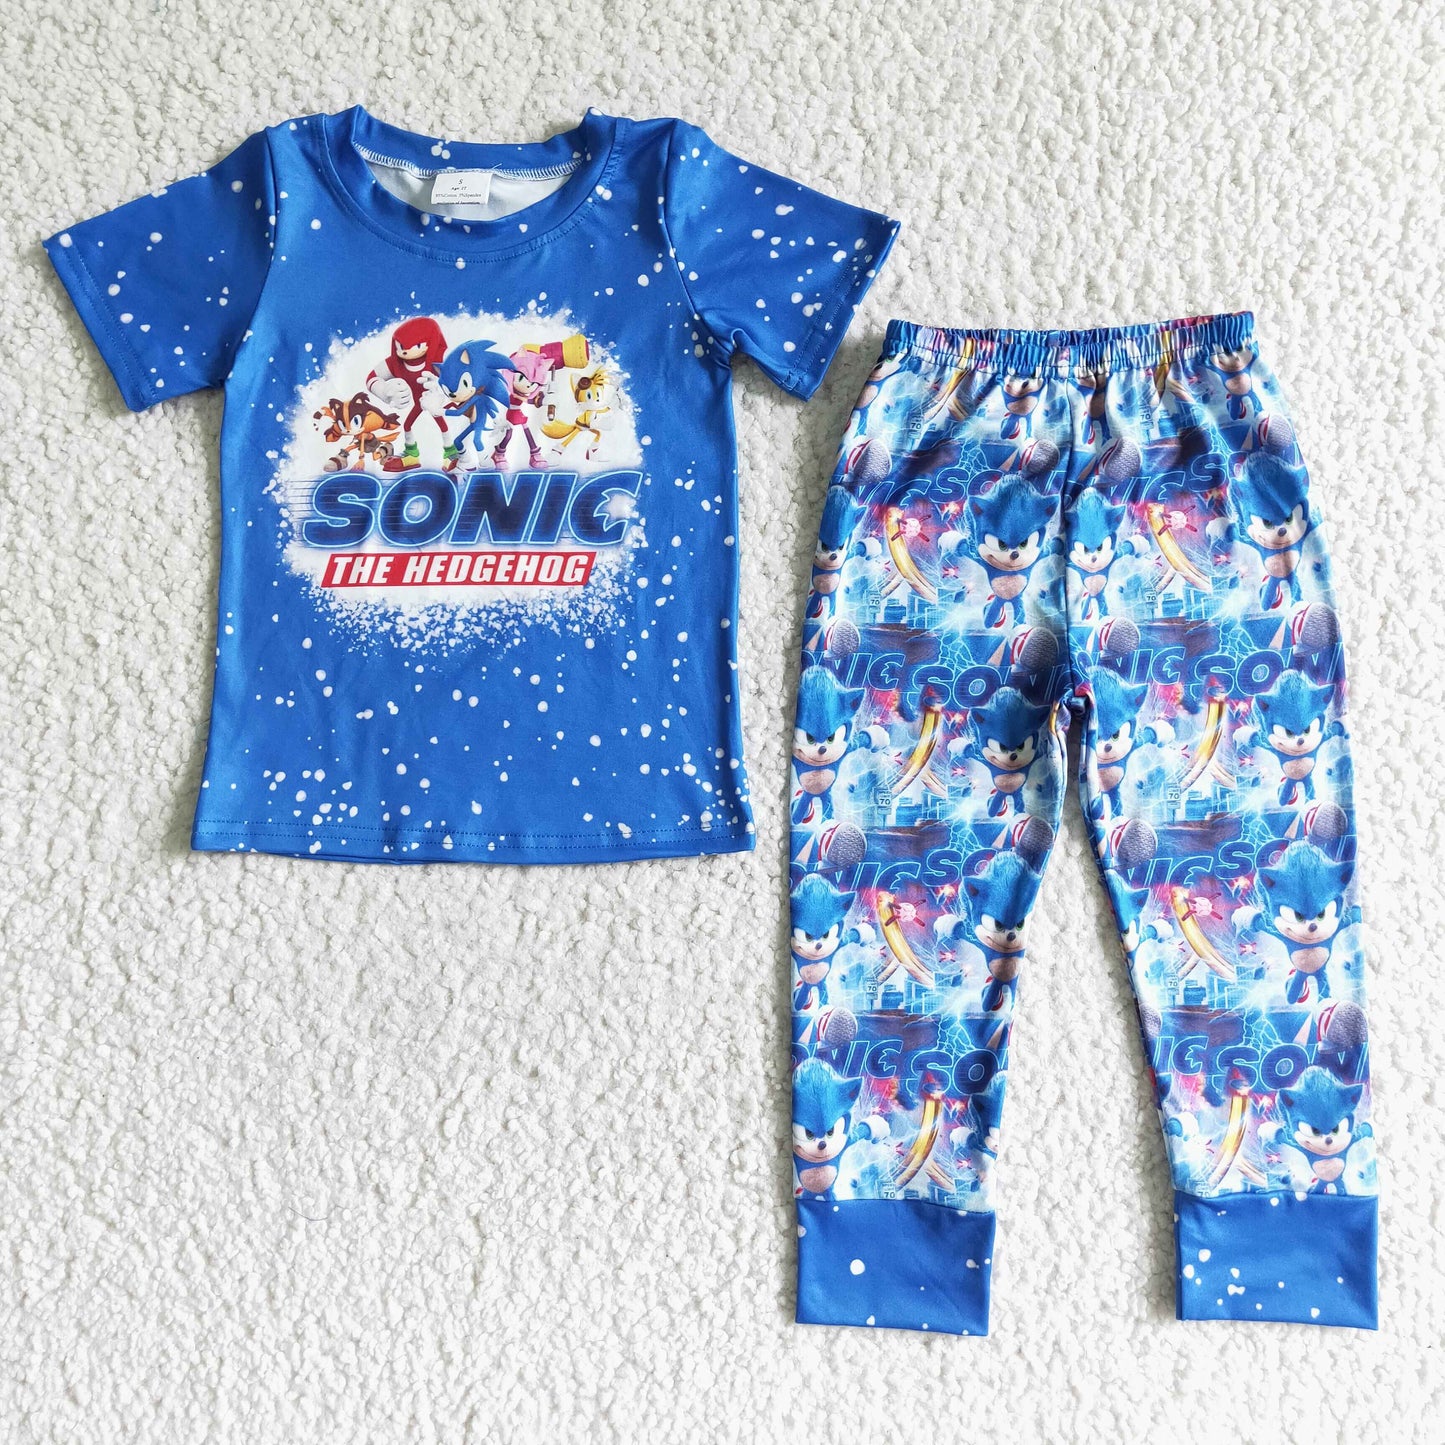 boy’s outfit short sleeve blue cartoon pants set